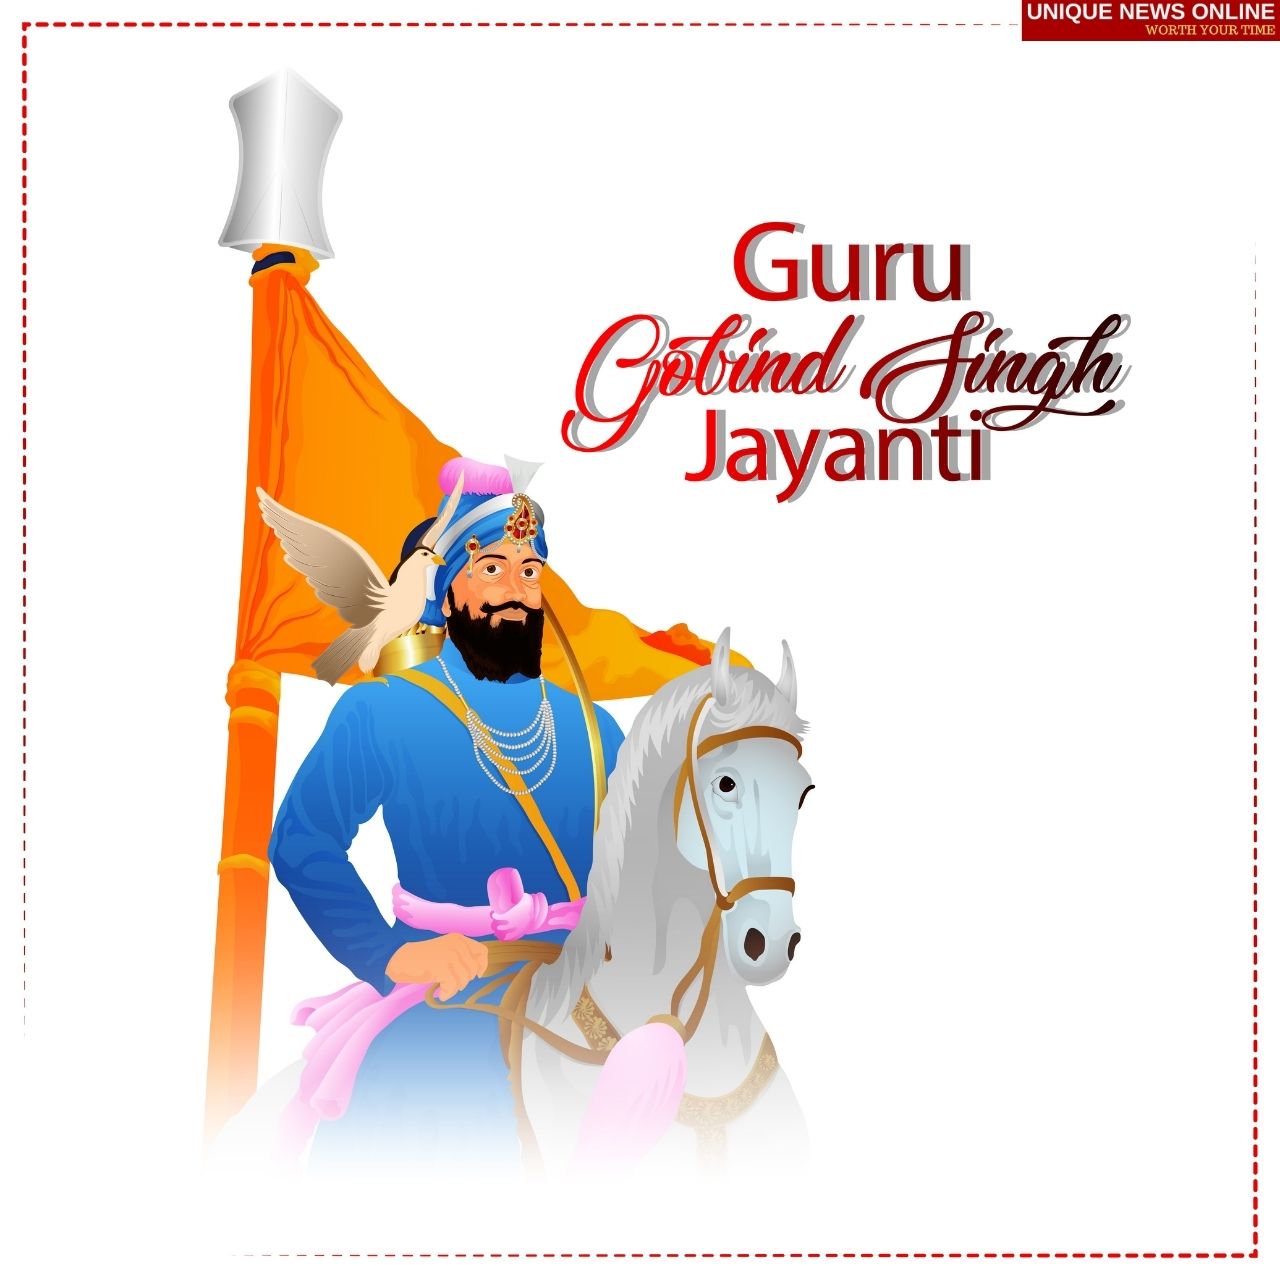 Guru Gobind Singh Jayanti 2022 Instagram Captions و Facebook Post و Twitter Greetings و Messages و Reddit Quotes to Share